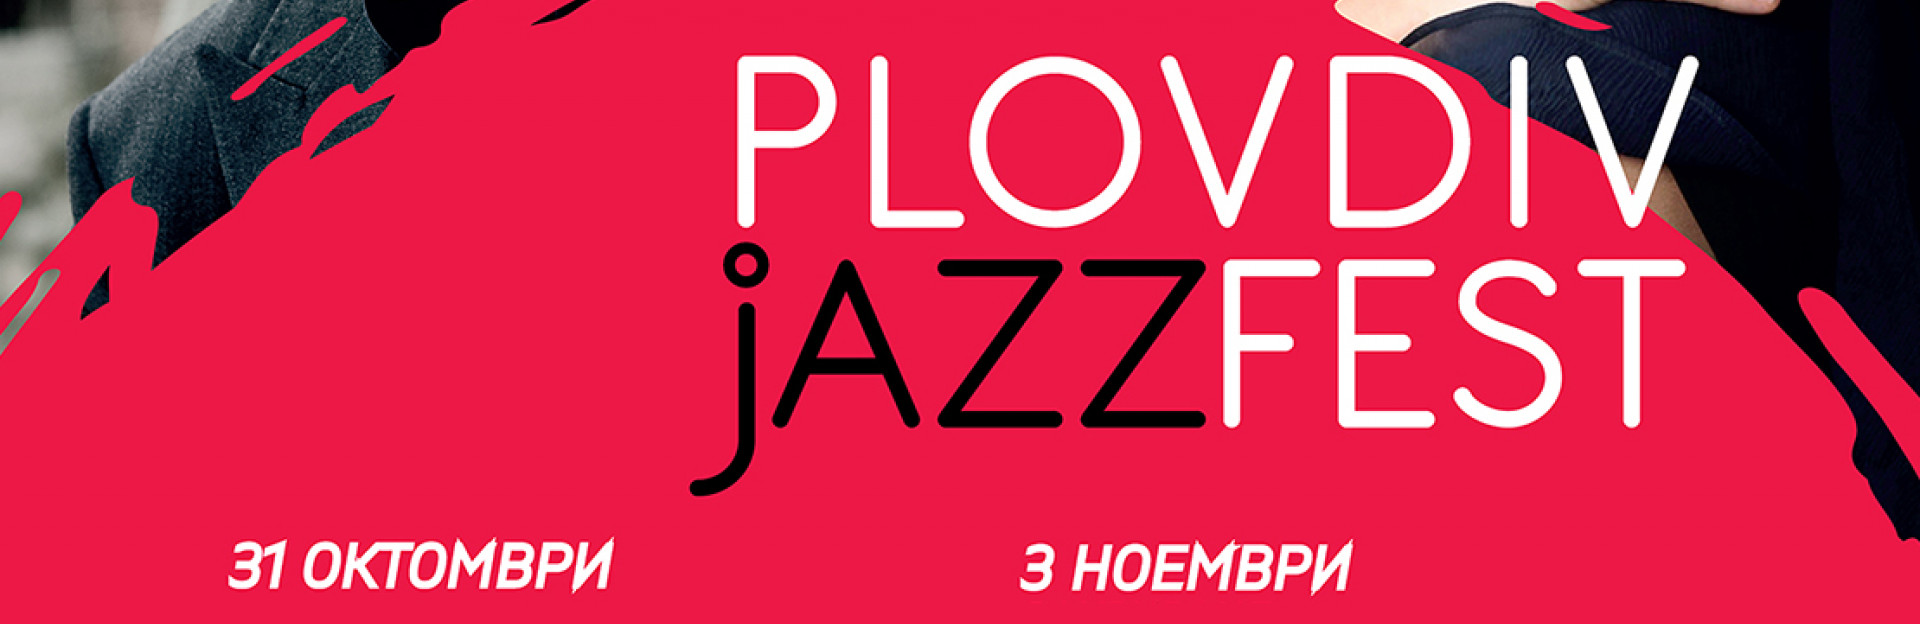 Plovdiv Jazz Fest 2018